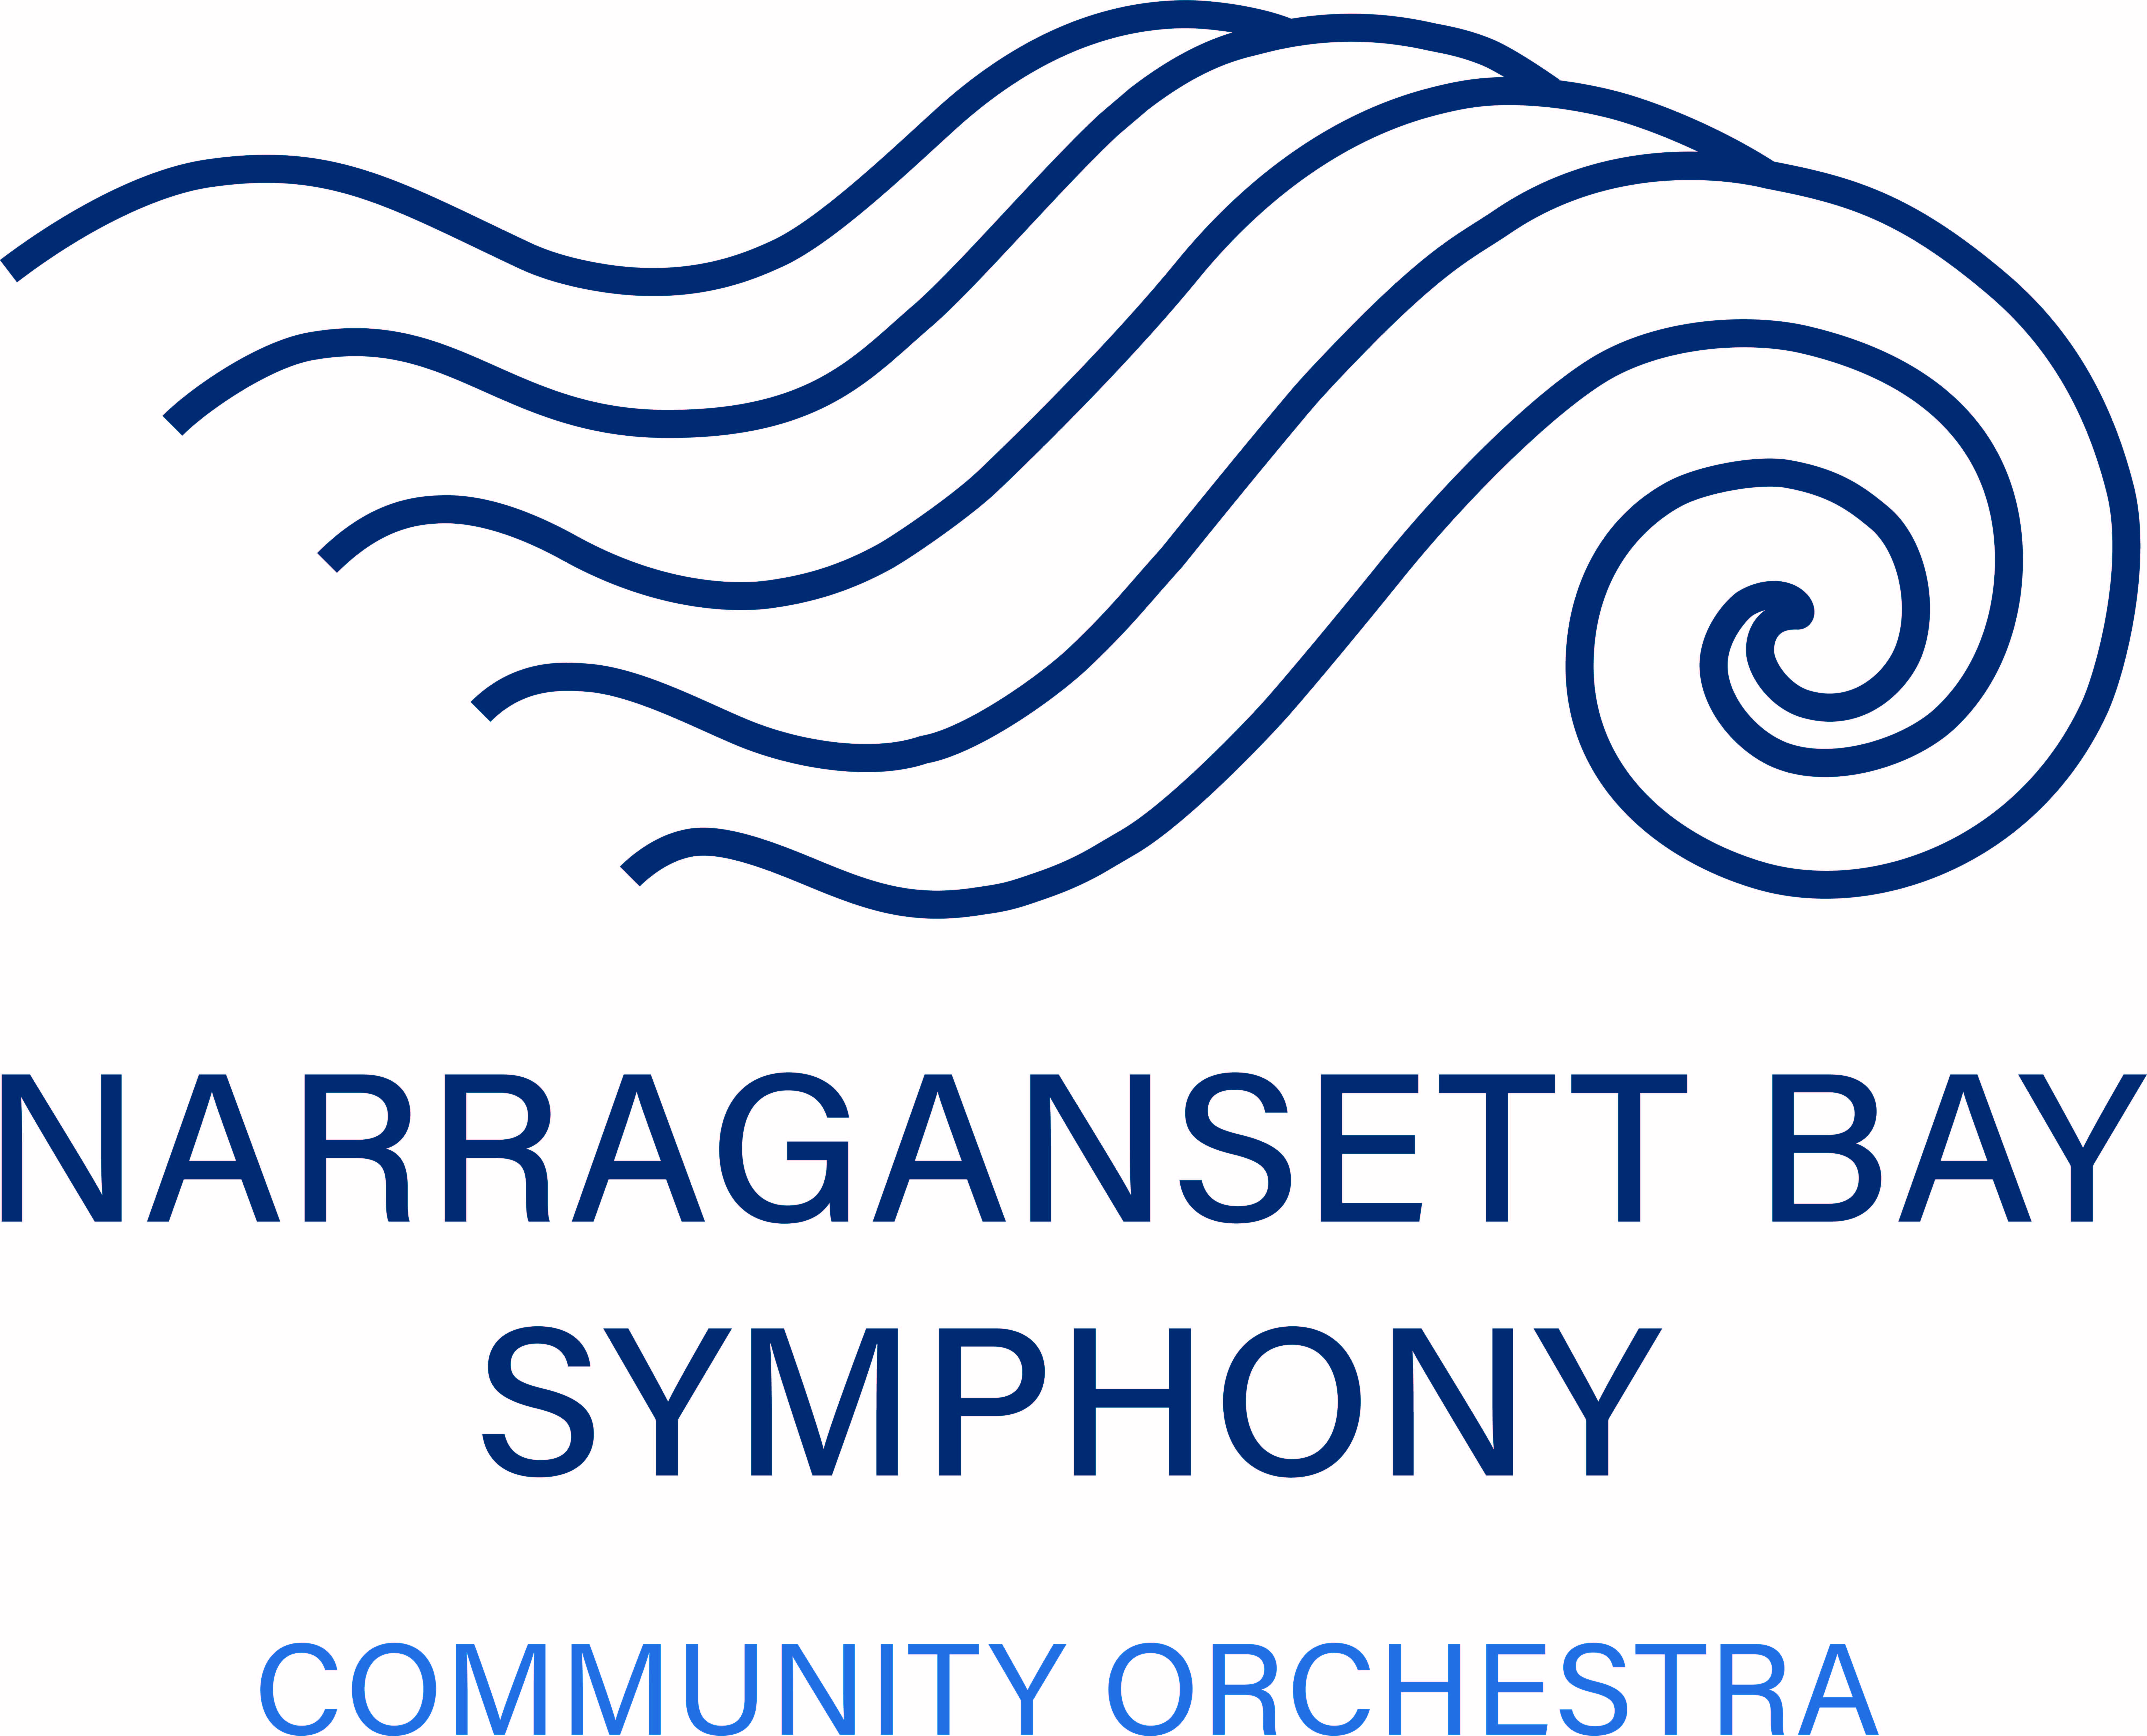 Narragansett Bay Symphony Community Orchestra Season Opening Concert: "Resonance and Revolution"